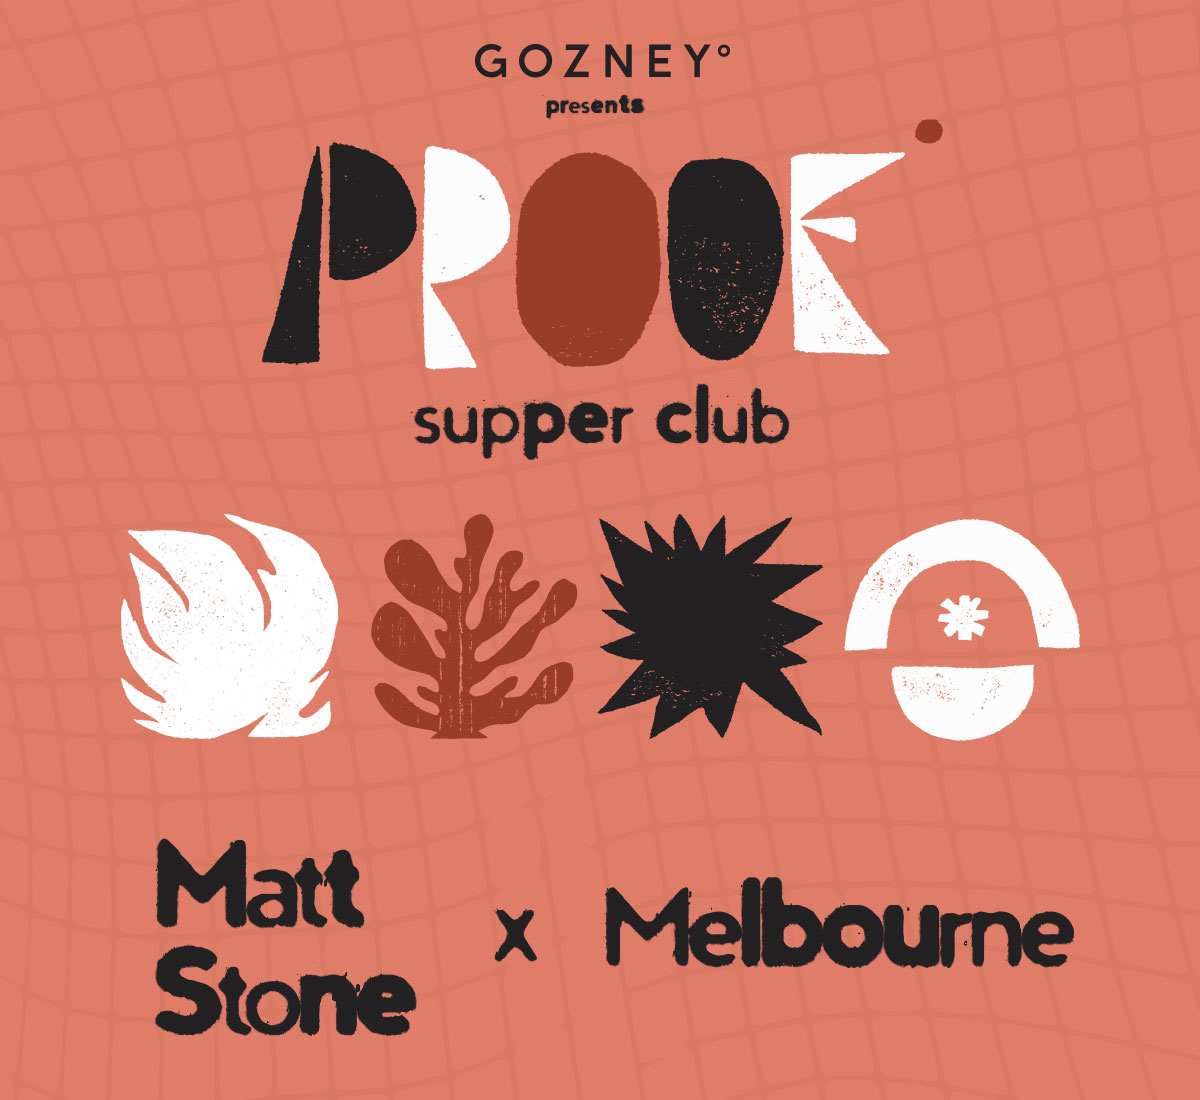 Proof Supper Club Melbourne